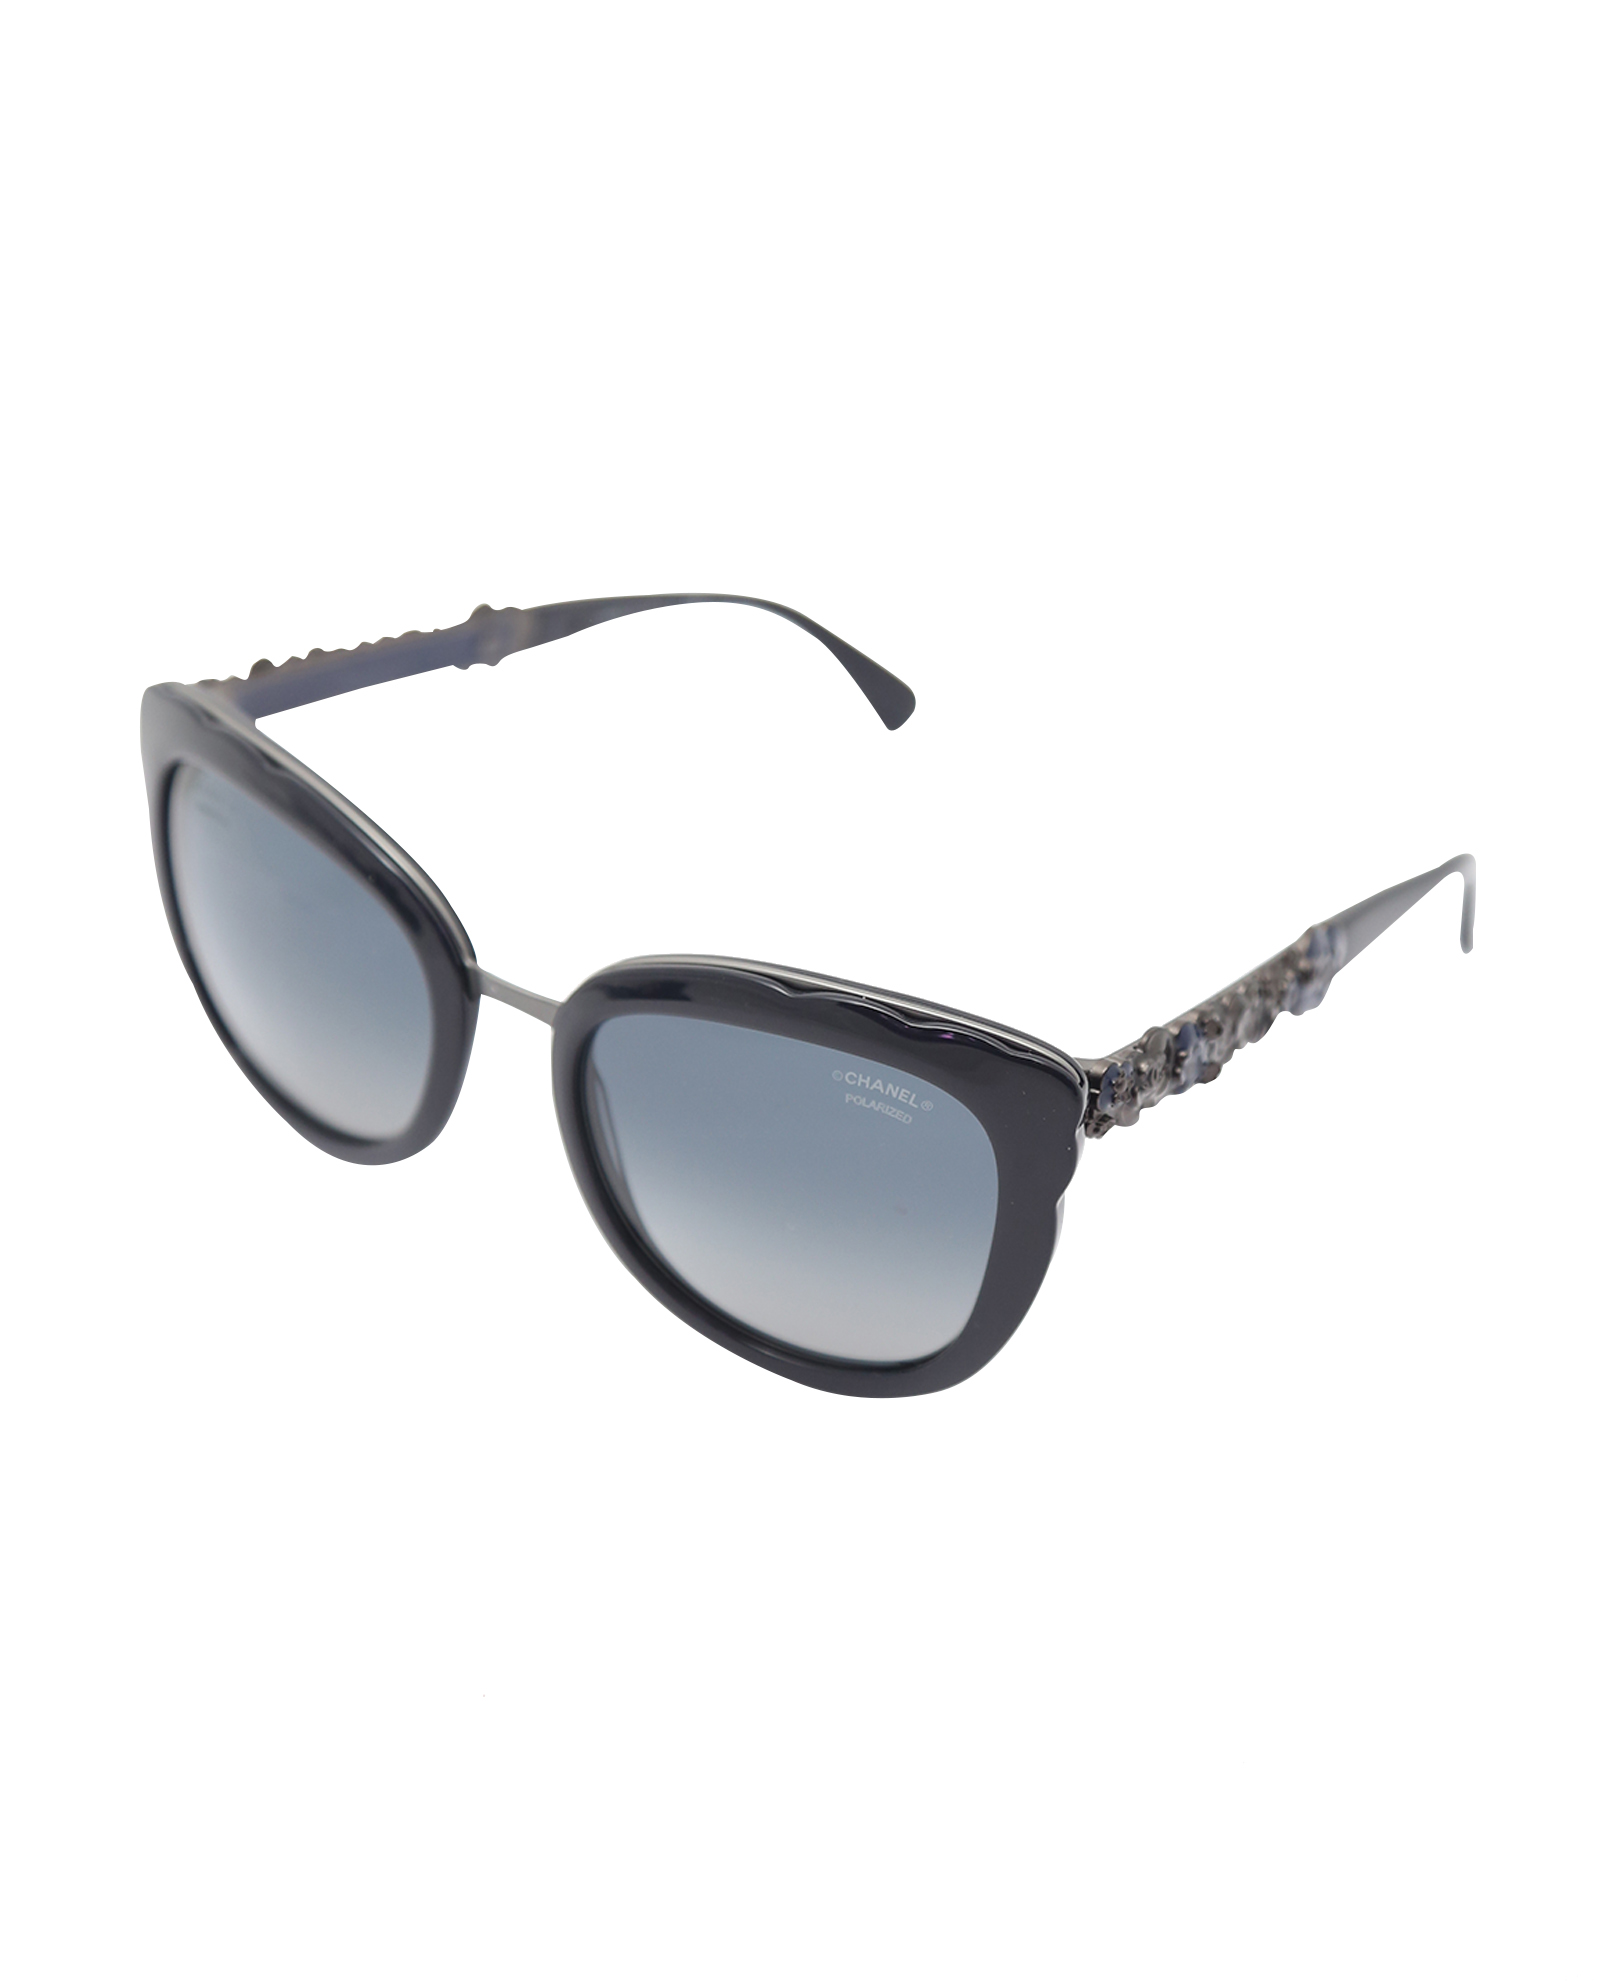 Chanel 5356 Bijou Polarized Sunglasses